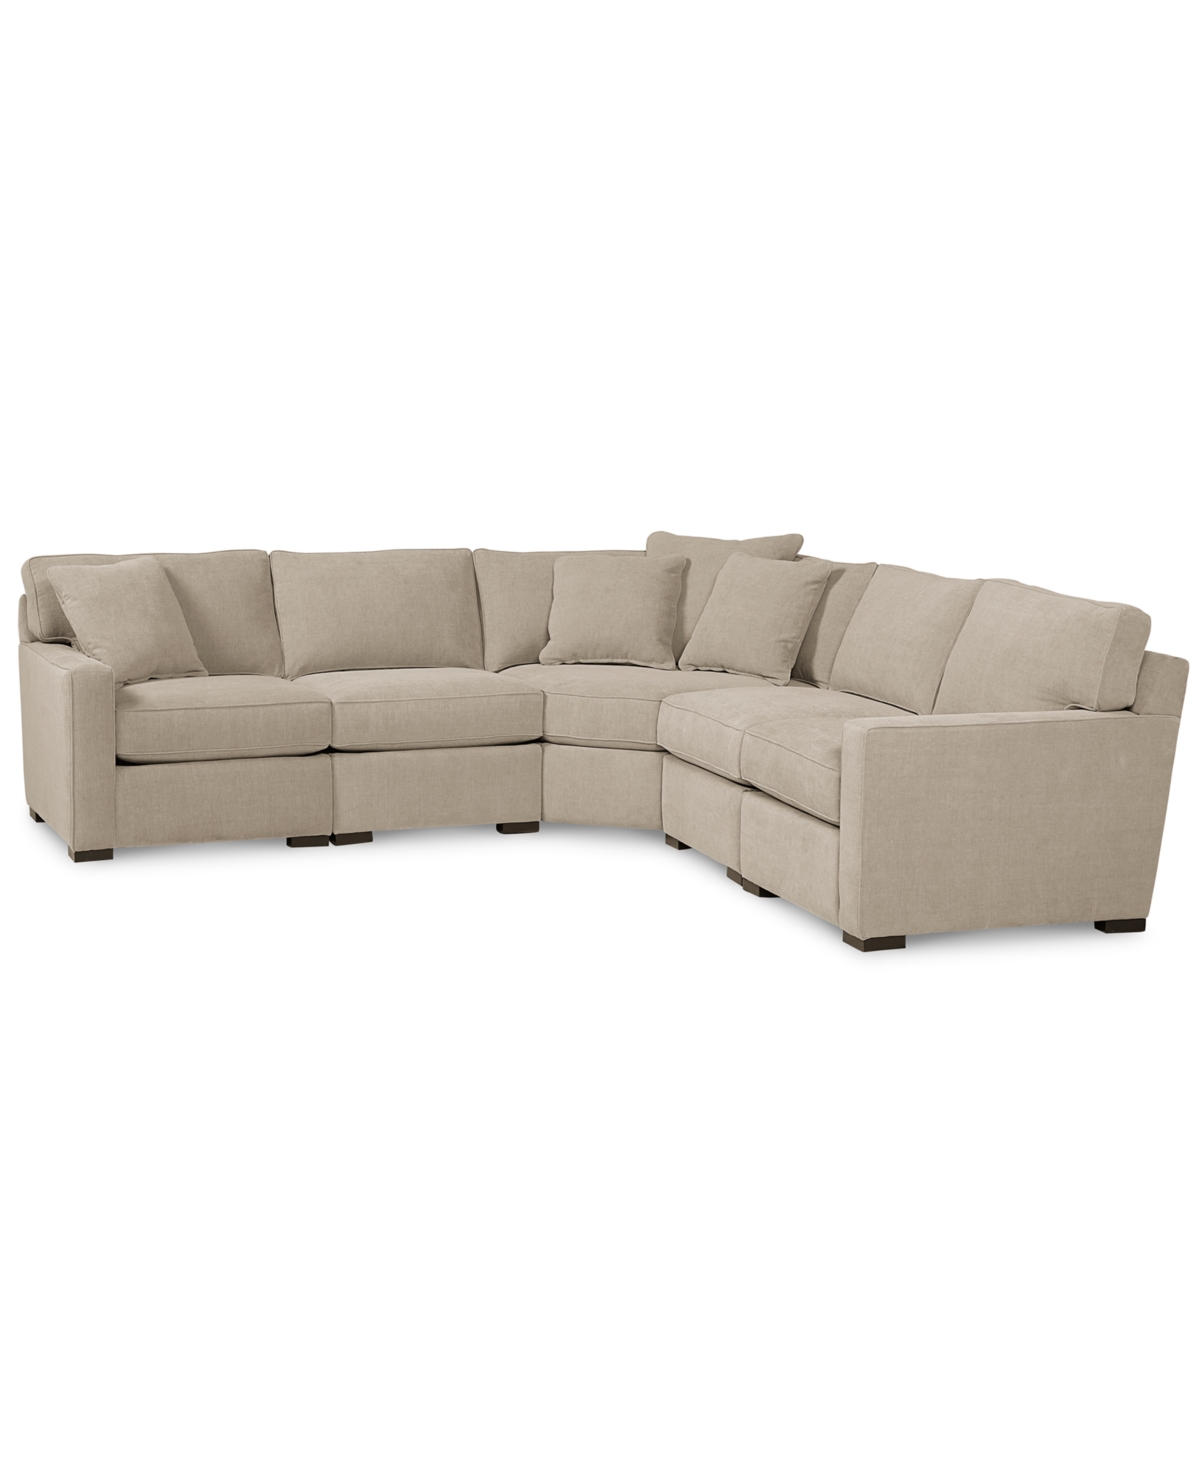 Radley Fabric 5-Piece Sectional Sofa, Created for Macys